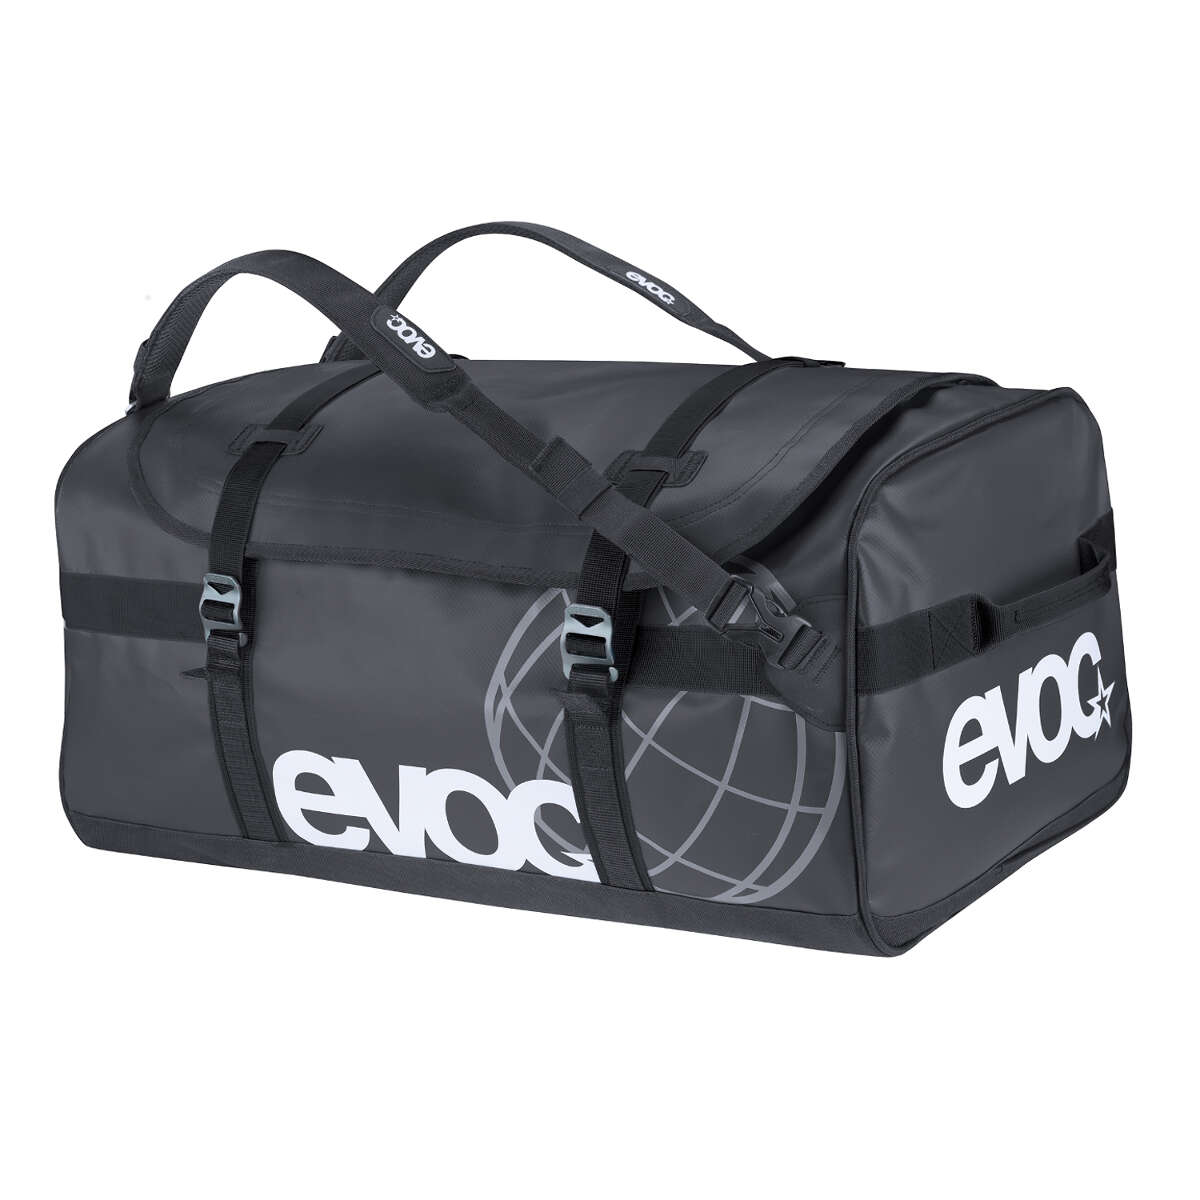 Evoc Travel Bag Duffle Bag Black, 60 Liter